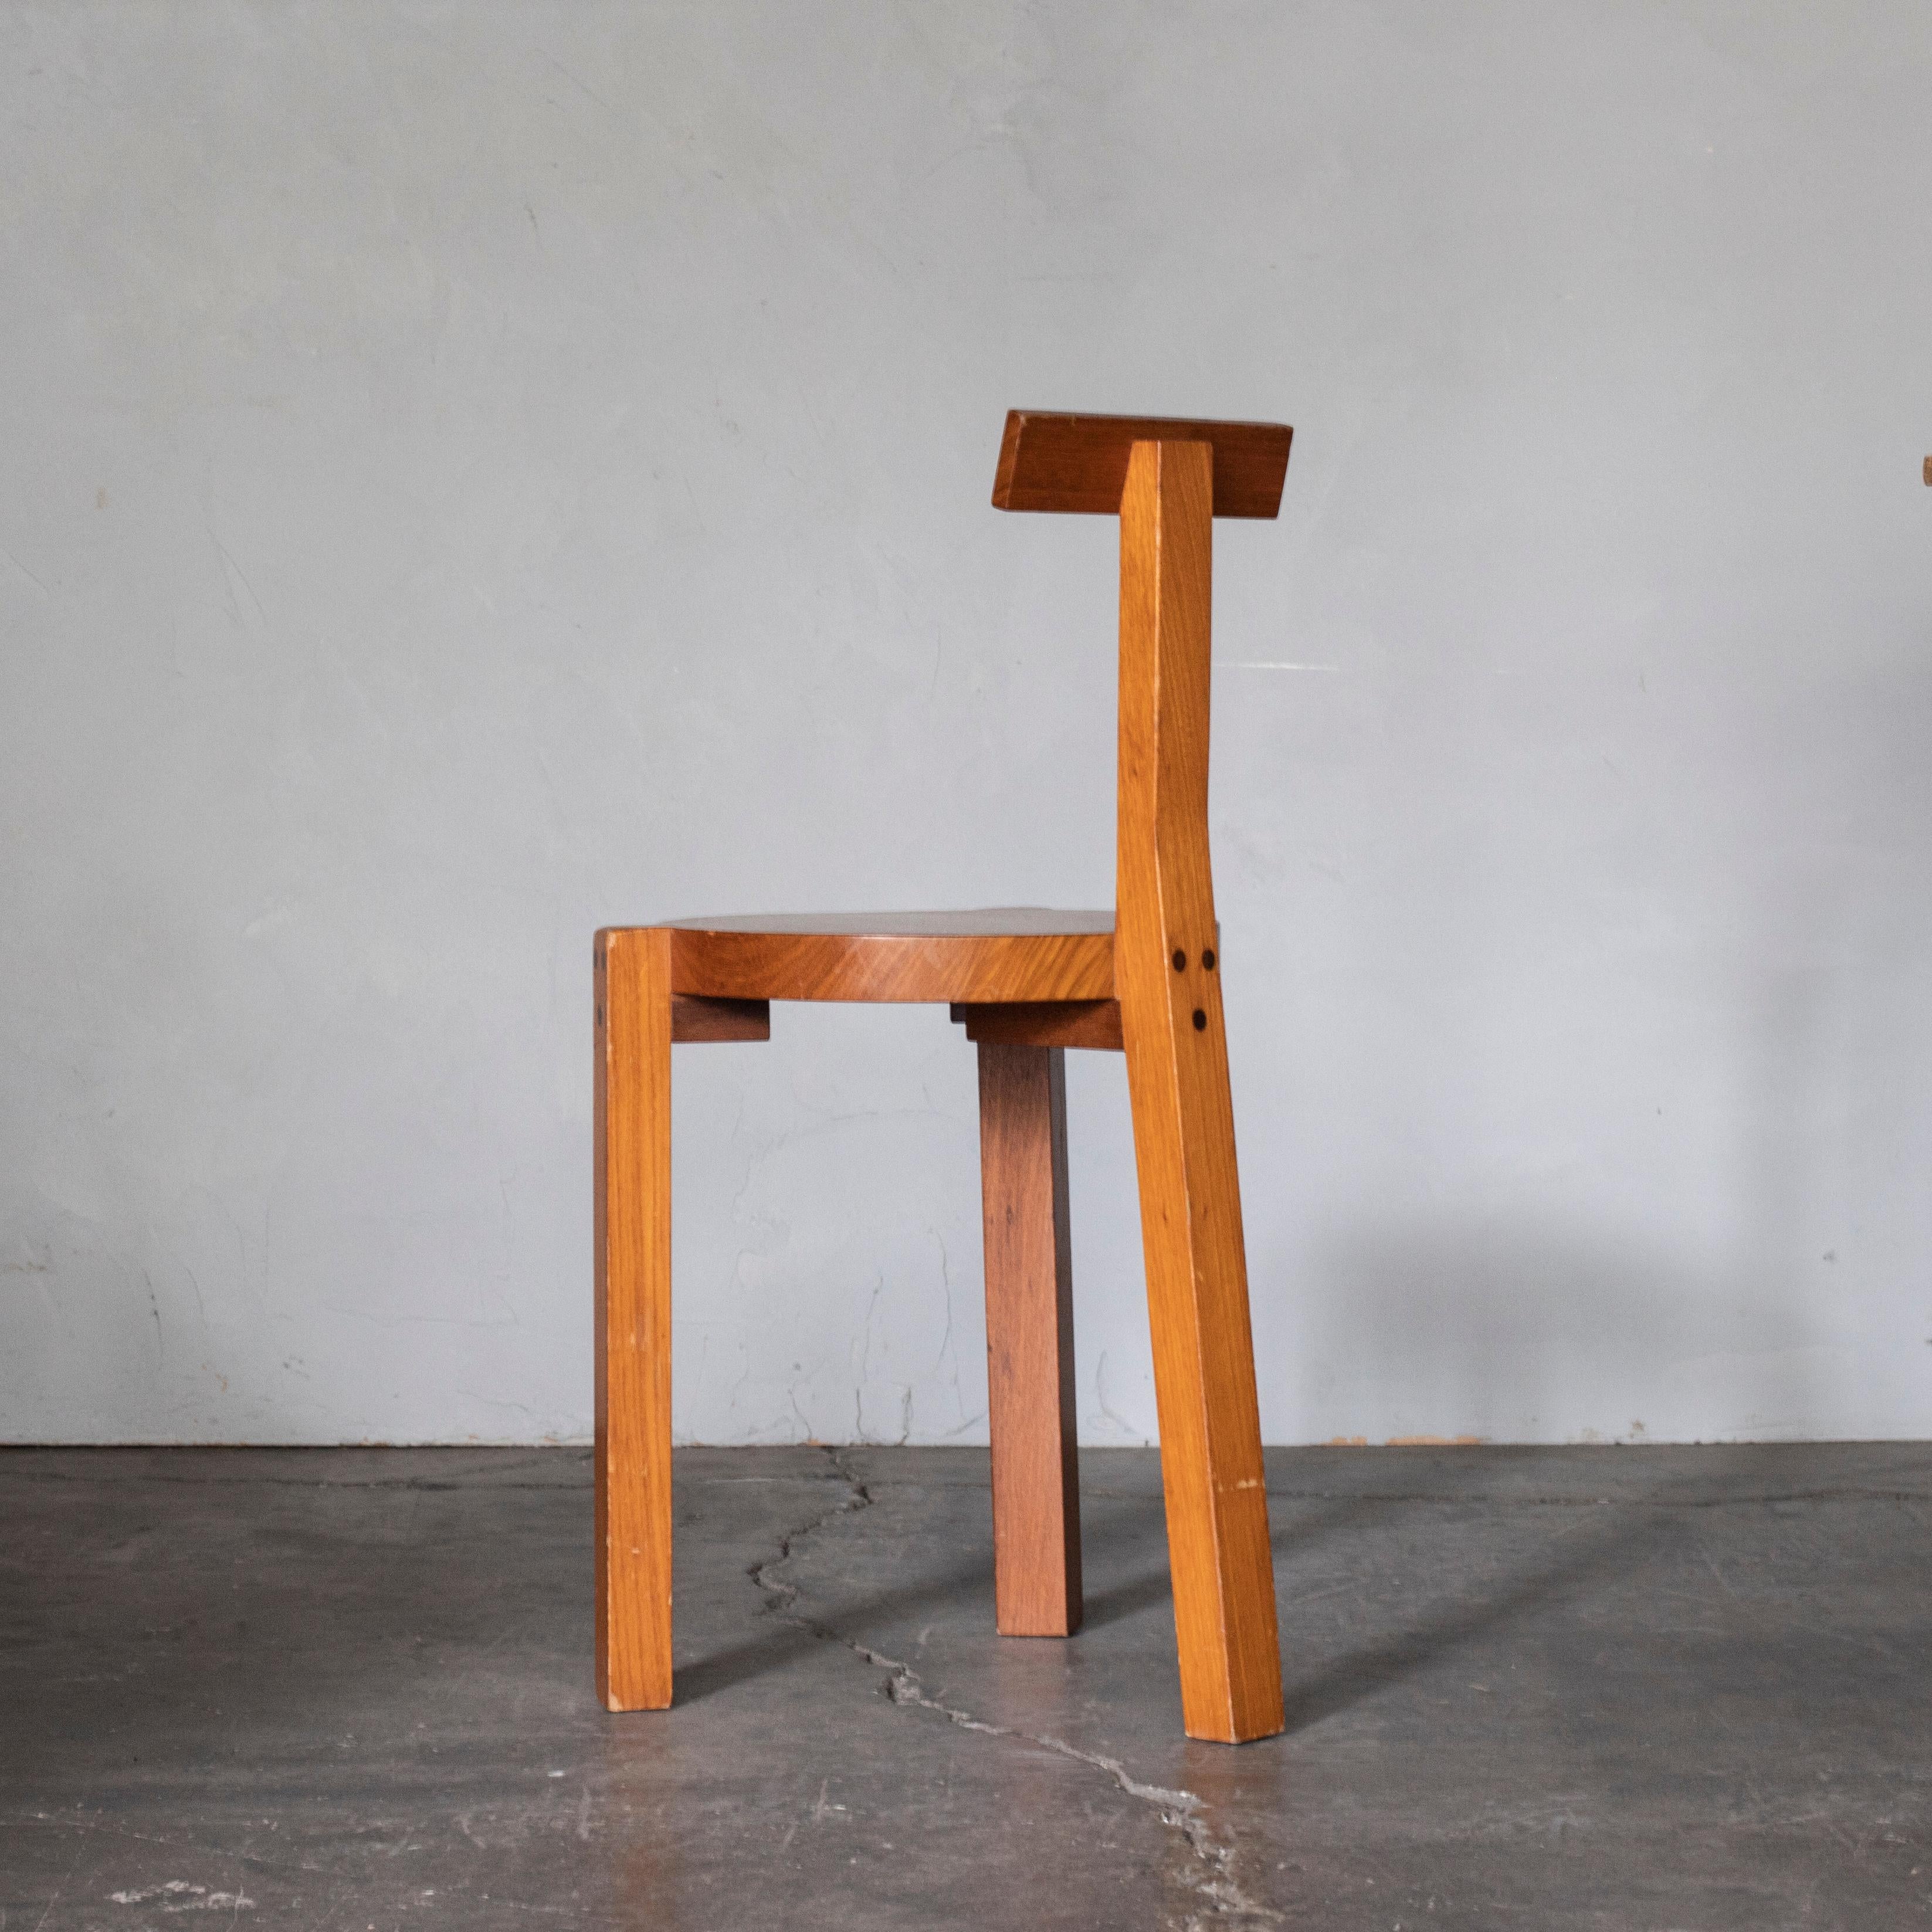 'Giraffe Chair' designed by Brazilian architect, Lina Bo Bardi, for the restaurant in 'Casa do Benin' in 1980s.
Manufactured by Baraúna.